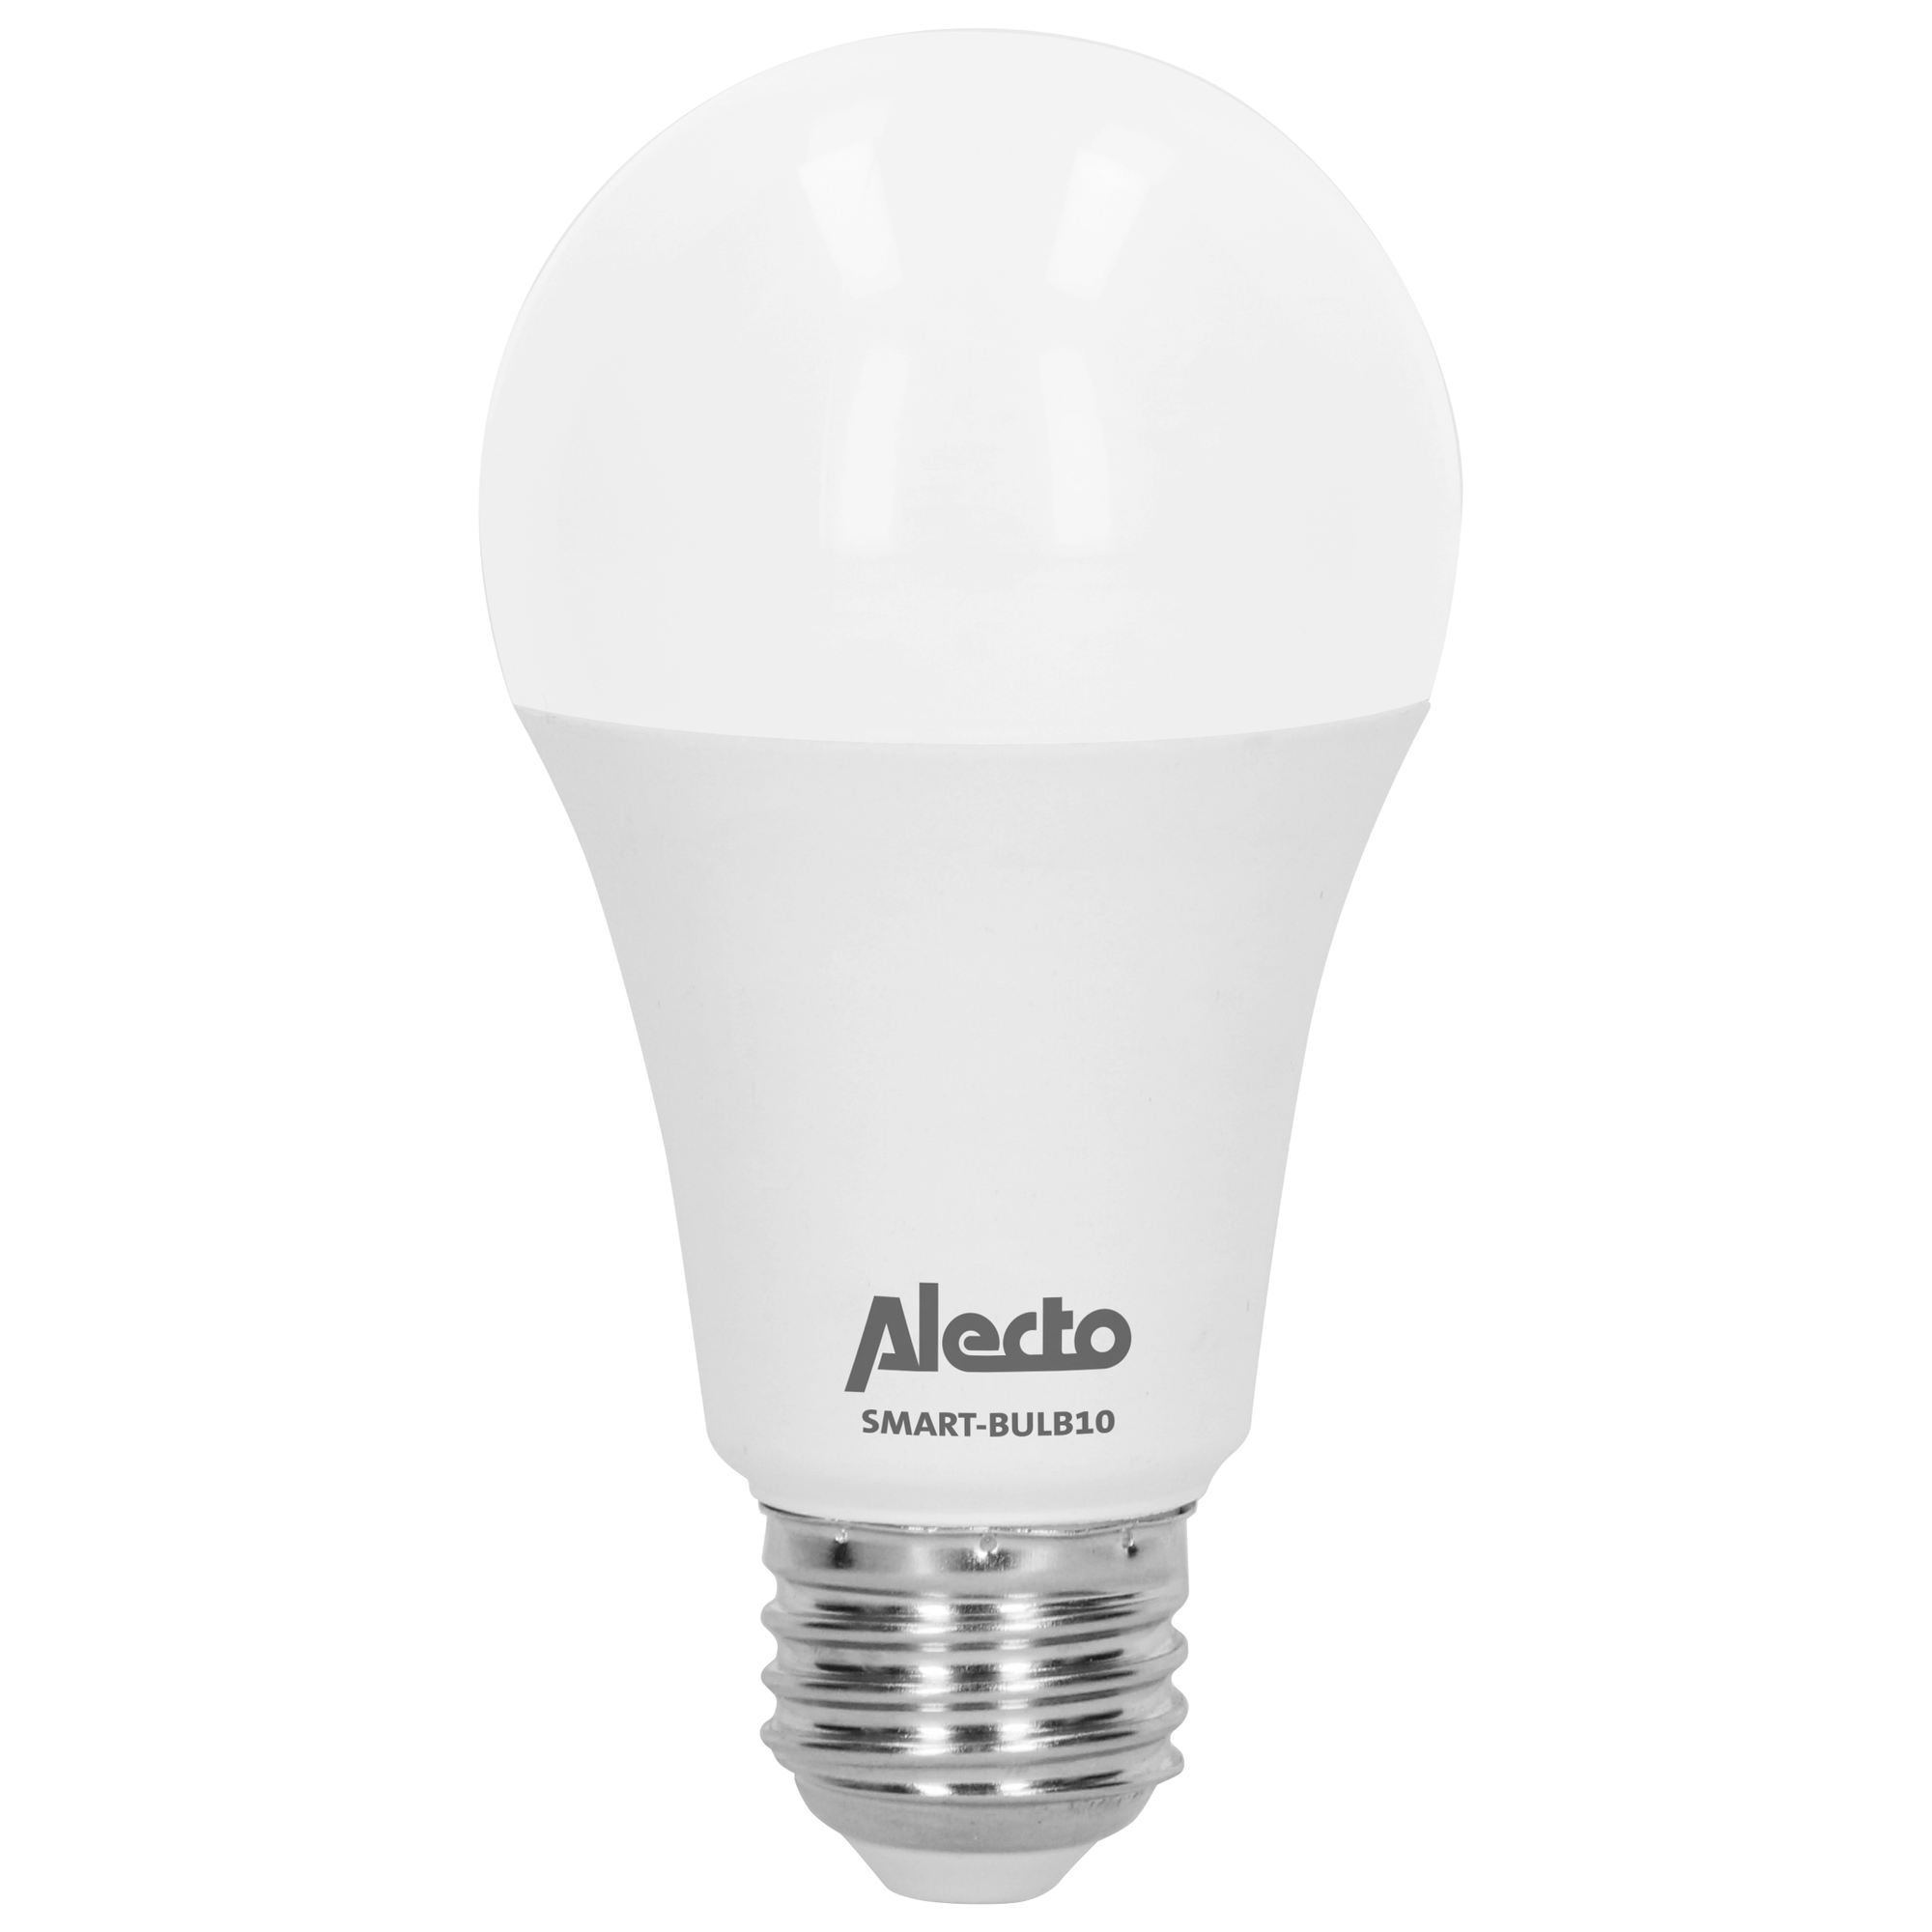 Weiß,Warmes warmes SMART-BULB10 E27-Sockel mit ALECTO Weiß,RGB,Sehr Weiß,Neutrales Weiß Kaltes WLAN-LED-Glühlampe smarte,mehrfarbige -